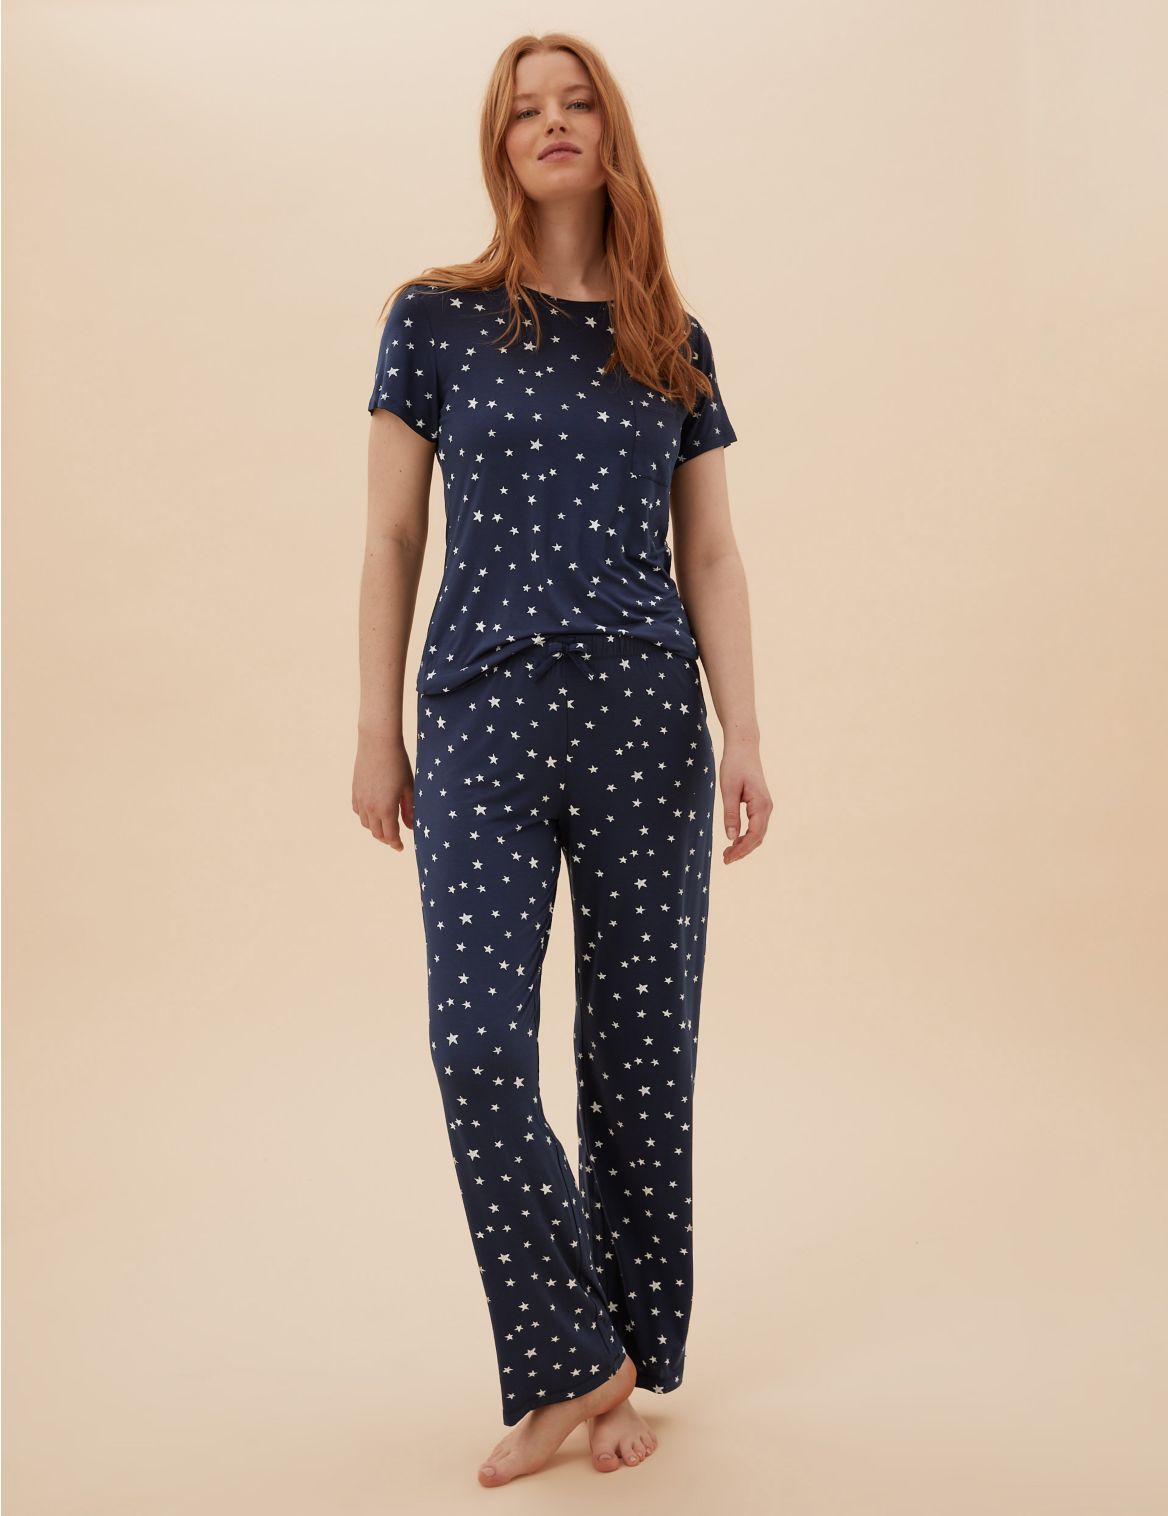 Star Print Pyjama Set navy